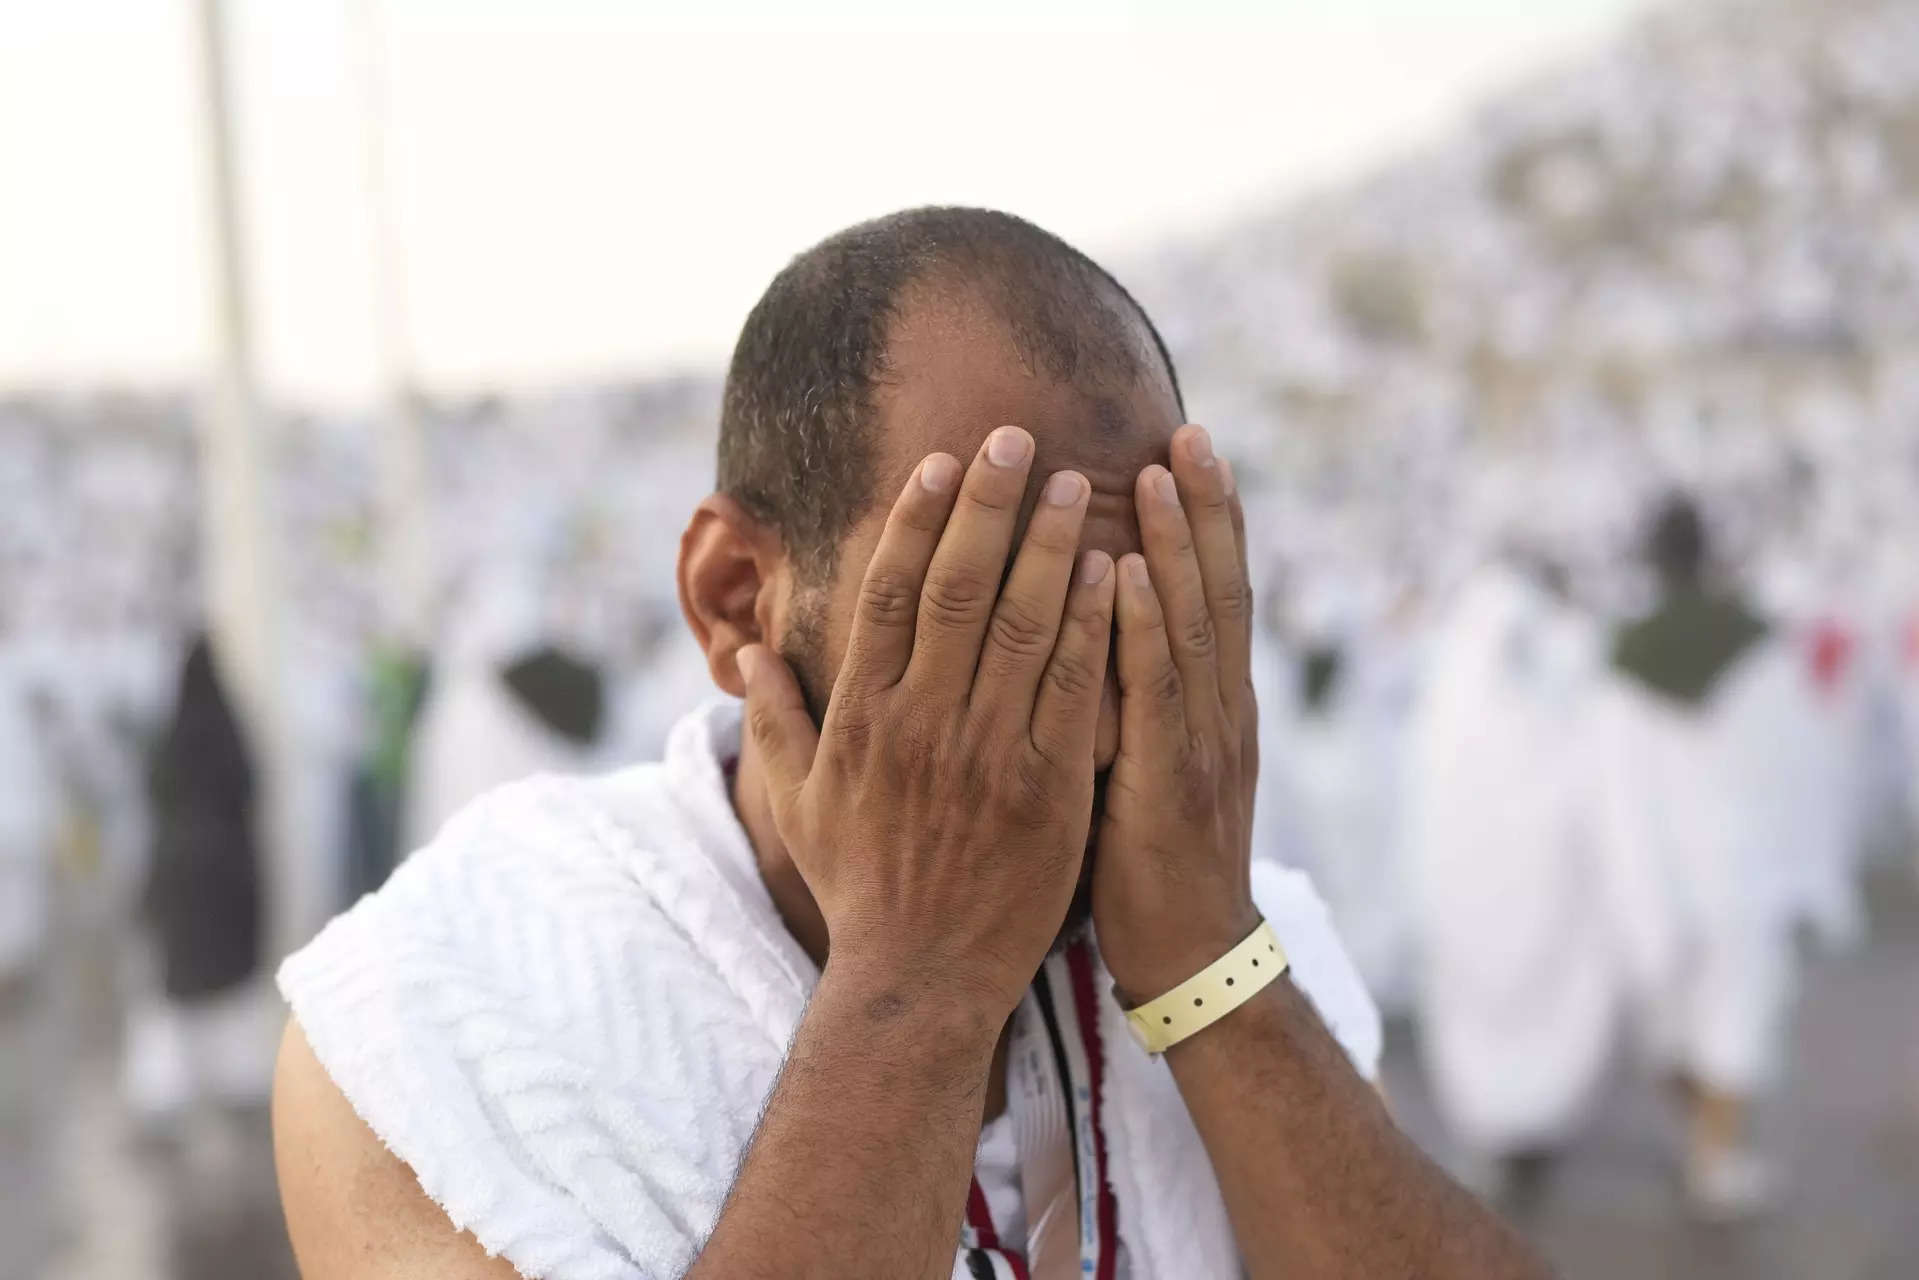 Pilgrims commence the final rites of Hajj as Muslims celebrate Eid al-Adha 